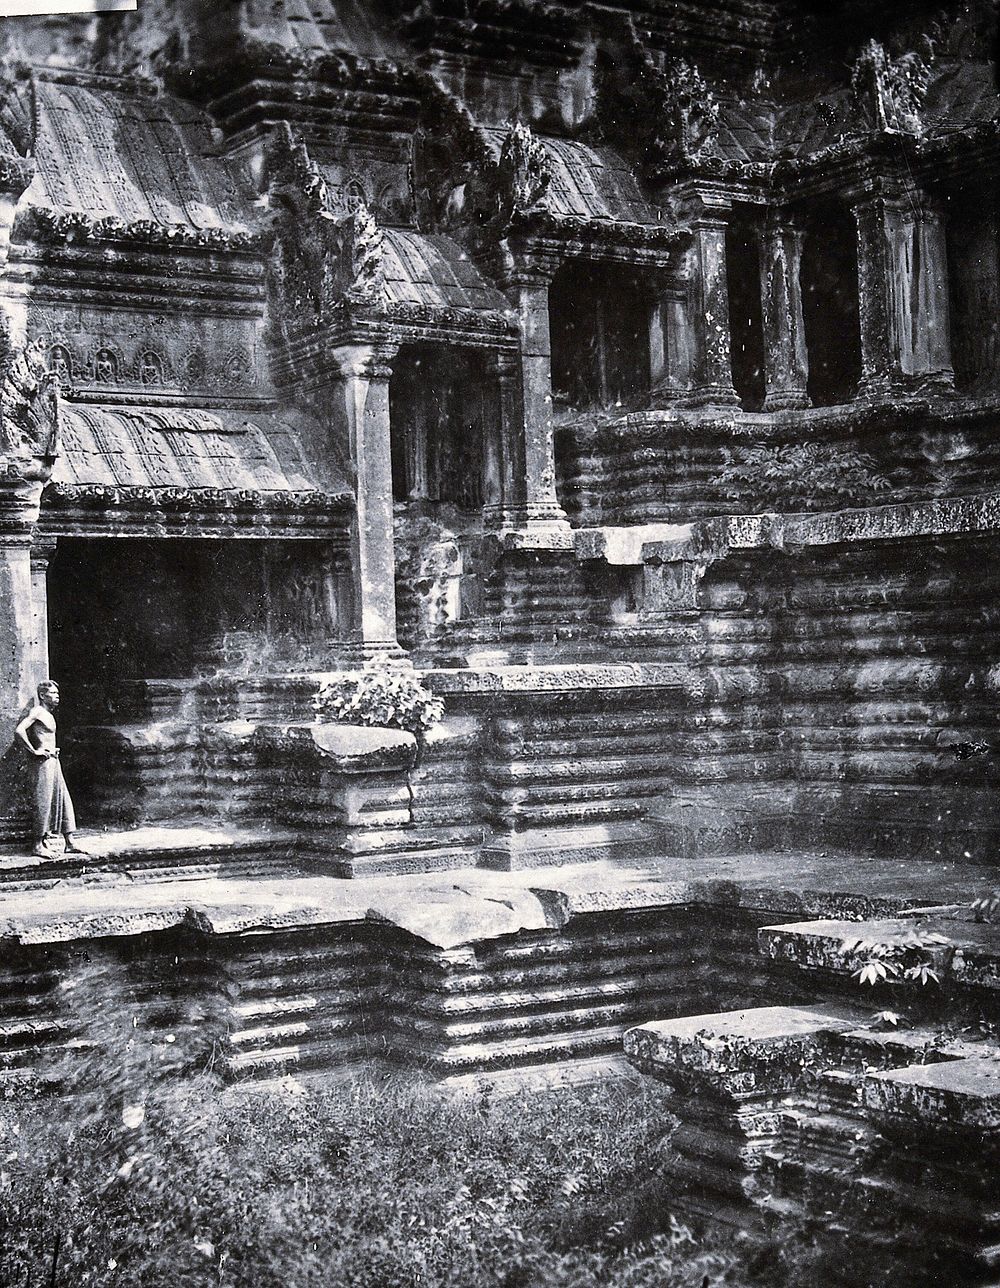 Nakhon Thom [Angkor Wat], Cambodia. Photograph, 1981, from a negative by John Thomson, 1866.